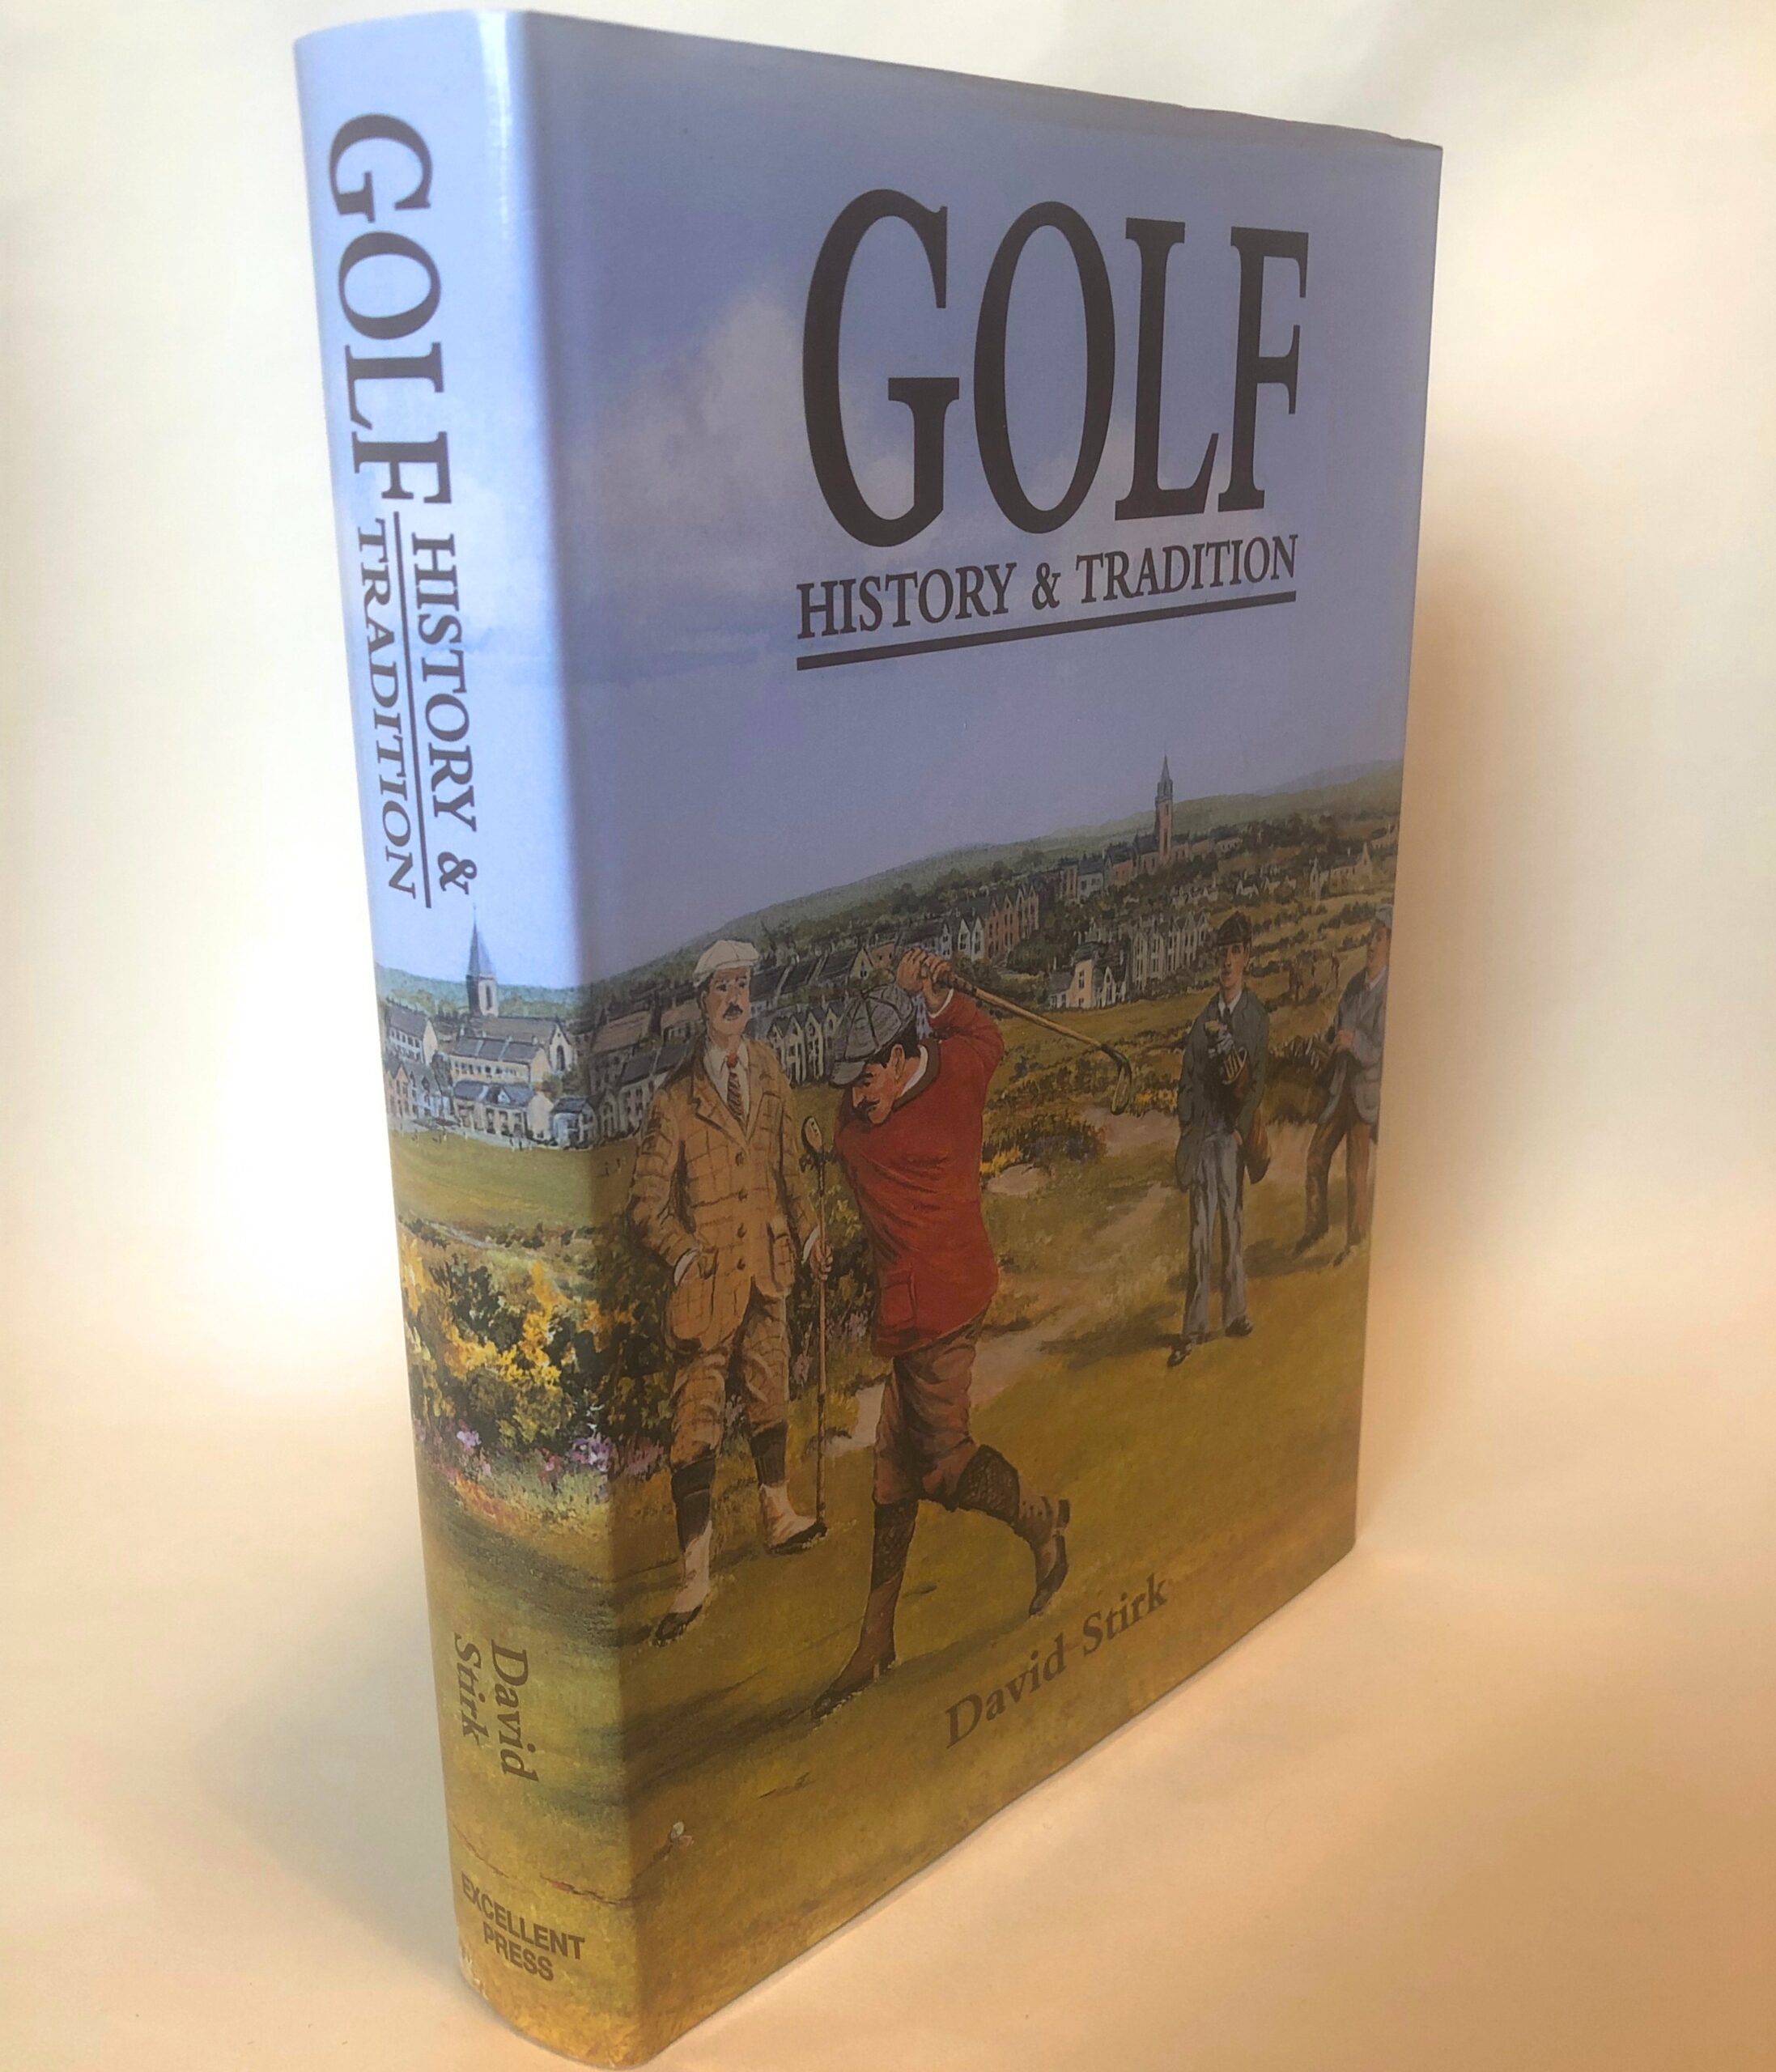 Golf: History & Tradition by David Stirk